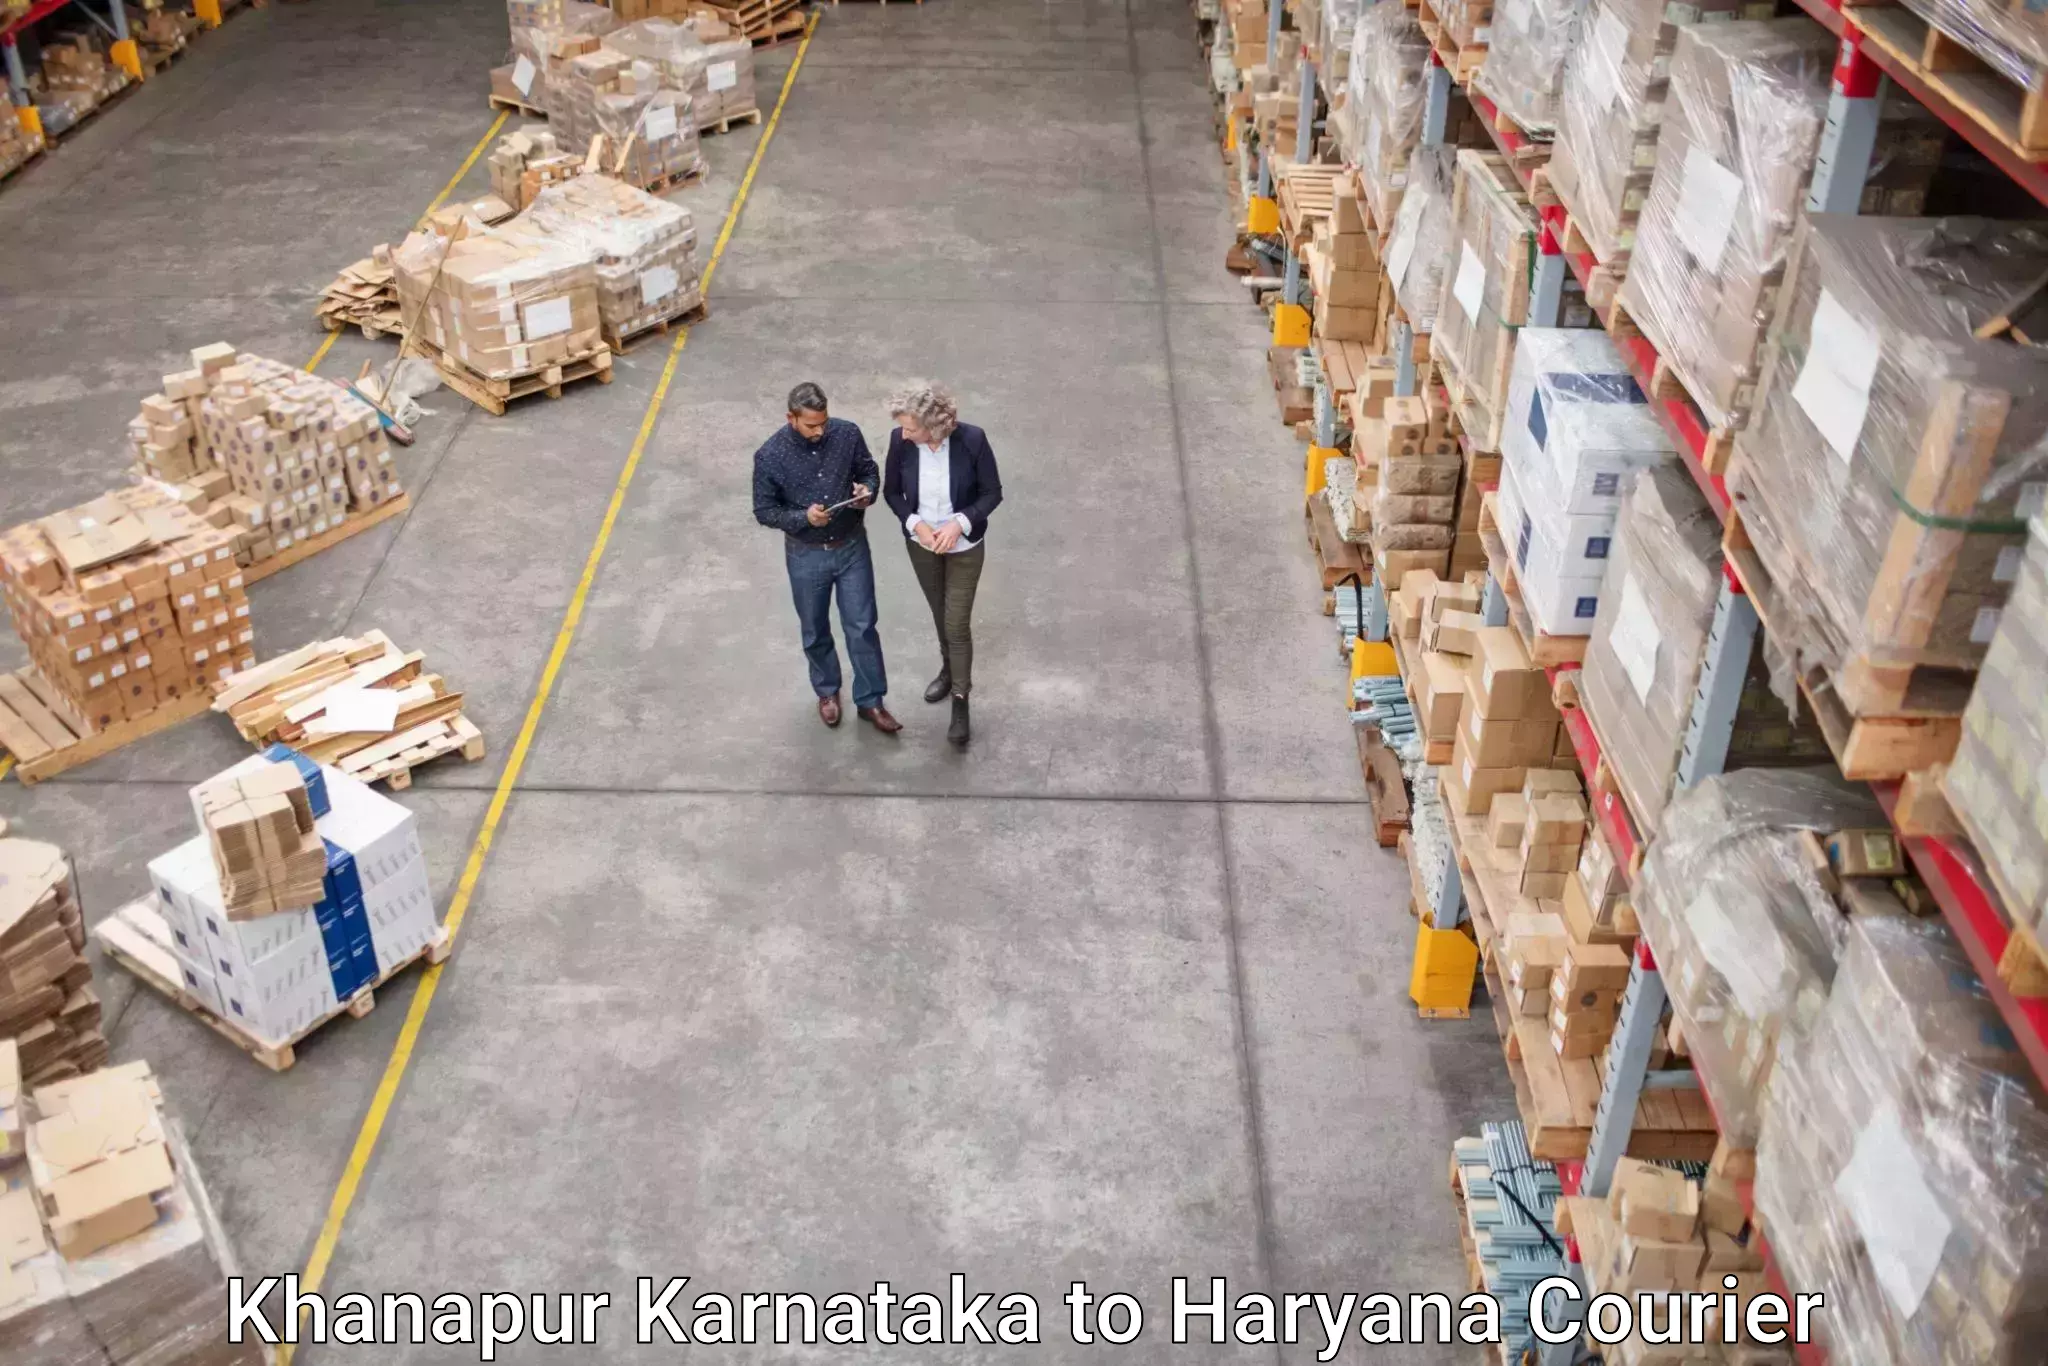 Next-day delivery options Khanapur Karnataka to Sonipat